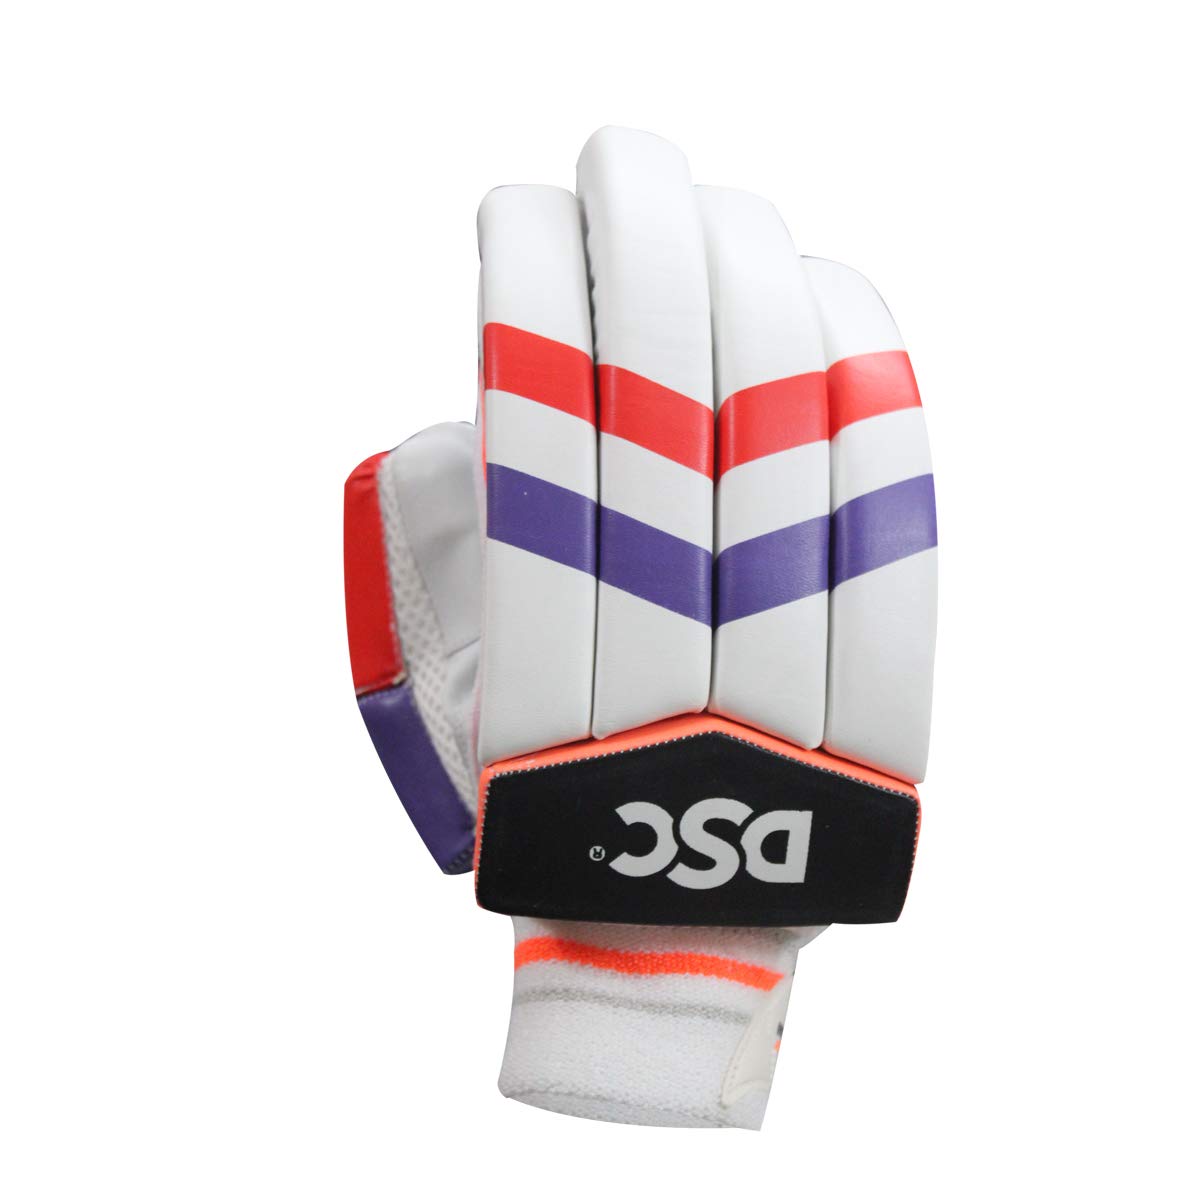 DSC Intense Attitude Leather Cricket Batting Gloves, Right (Red Purple) - Best Price online Prokicksports.com